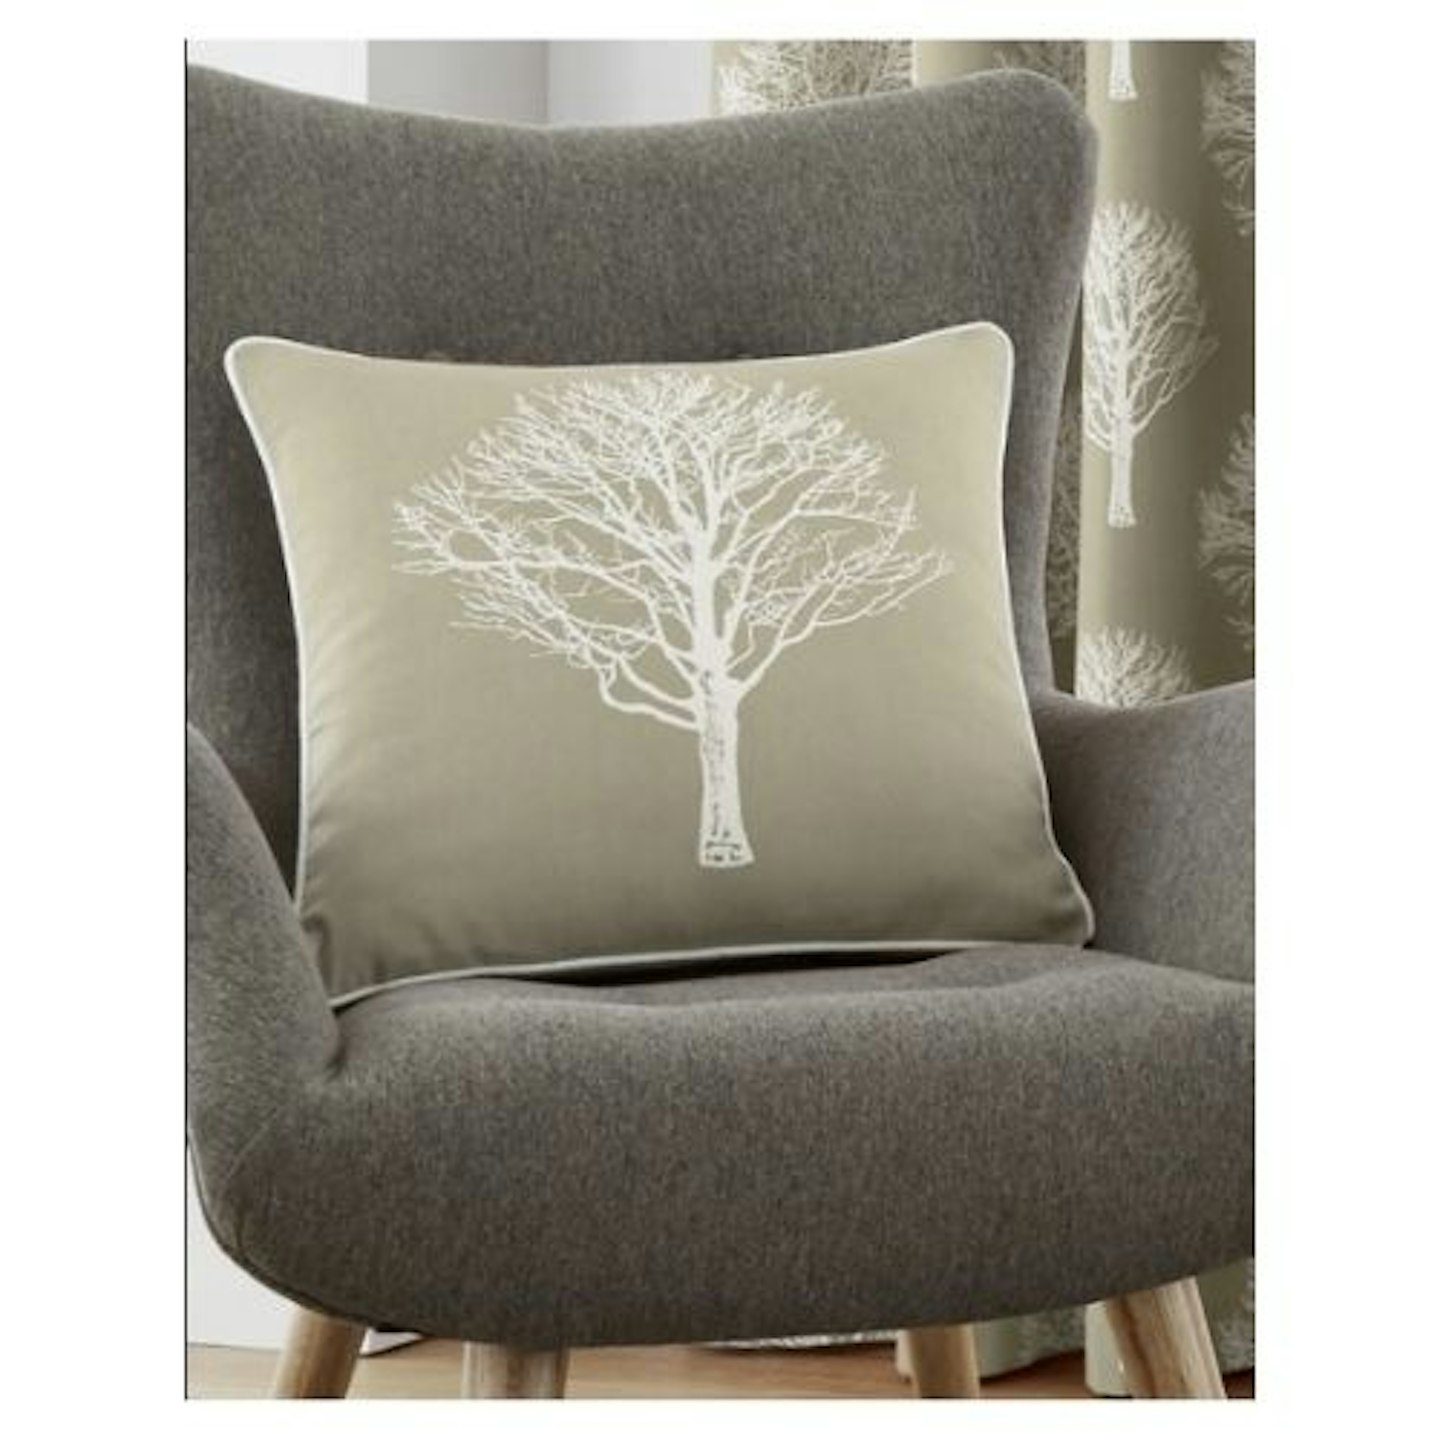 Fusion Woodland Tree cushion on grey chair